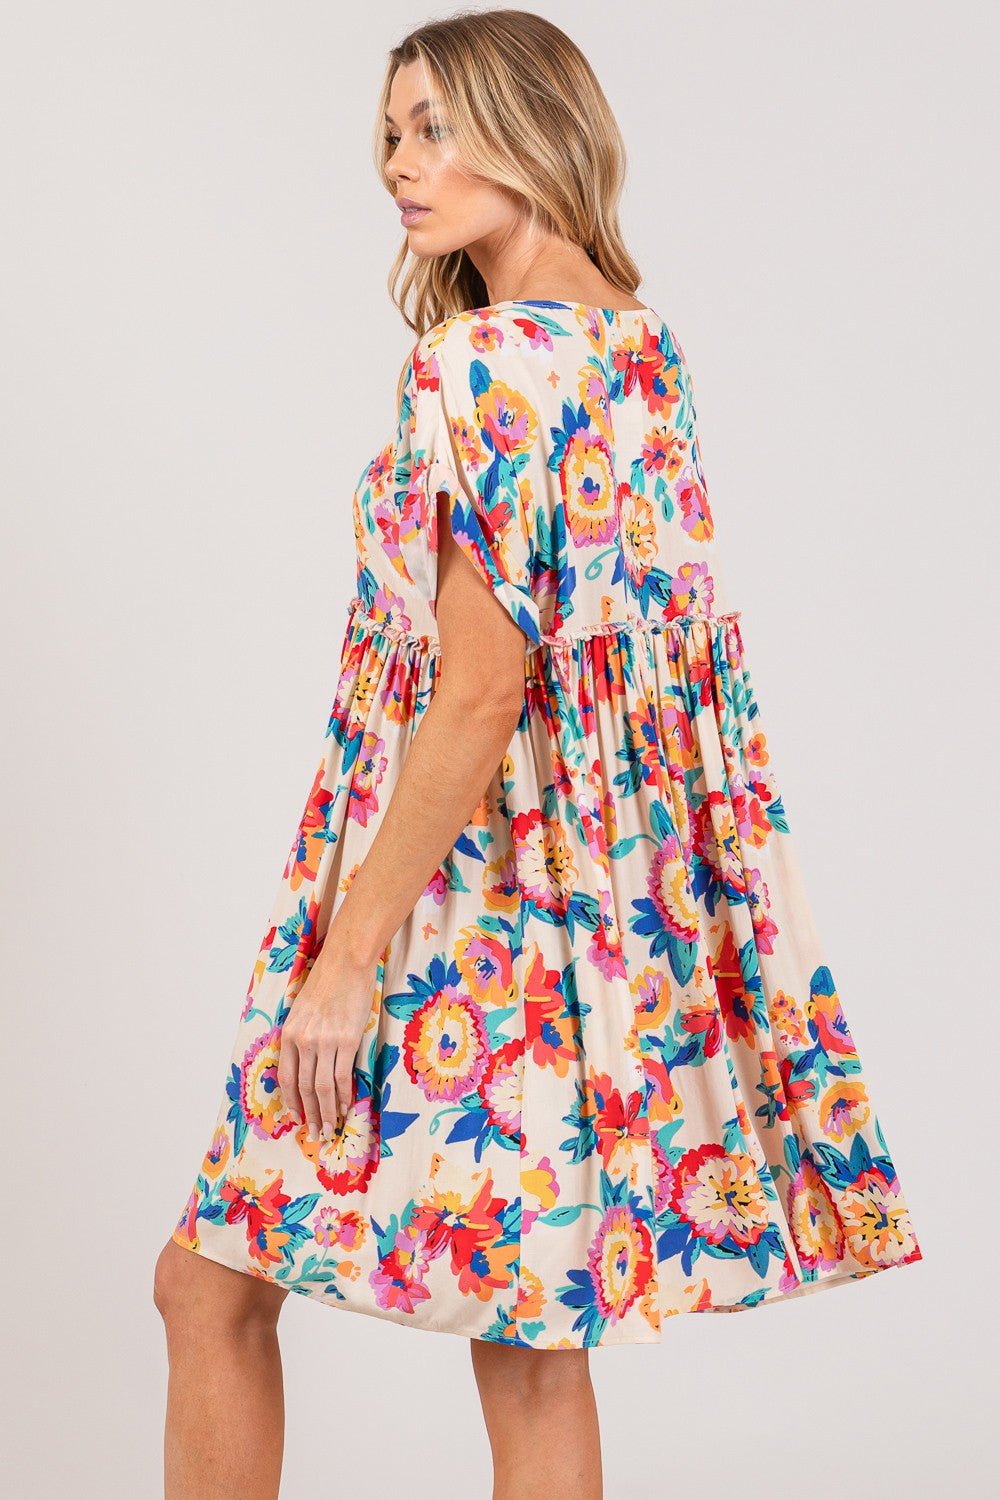 Multicolor Floral Print Button-Down Short Sleeve Mini DressMini DressSAGE+FIG